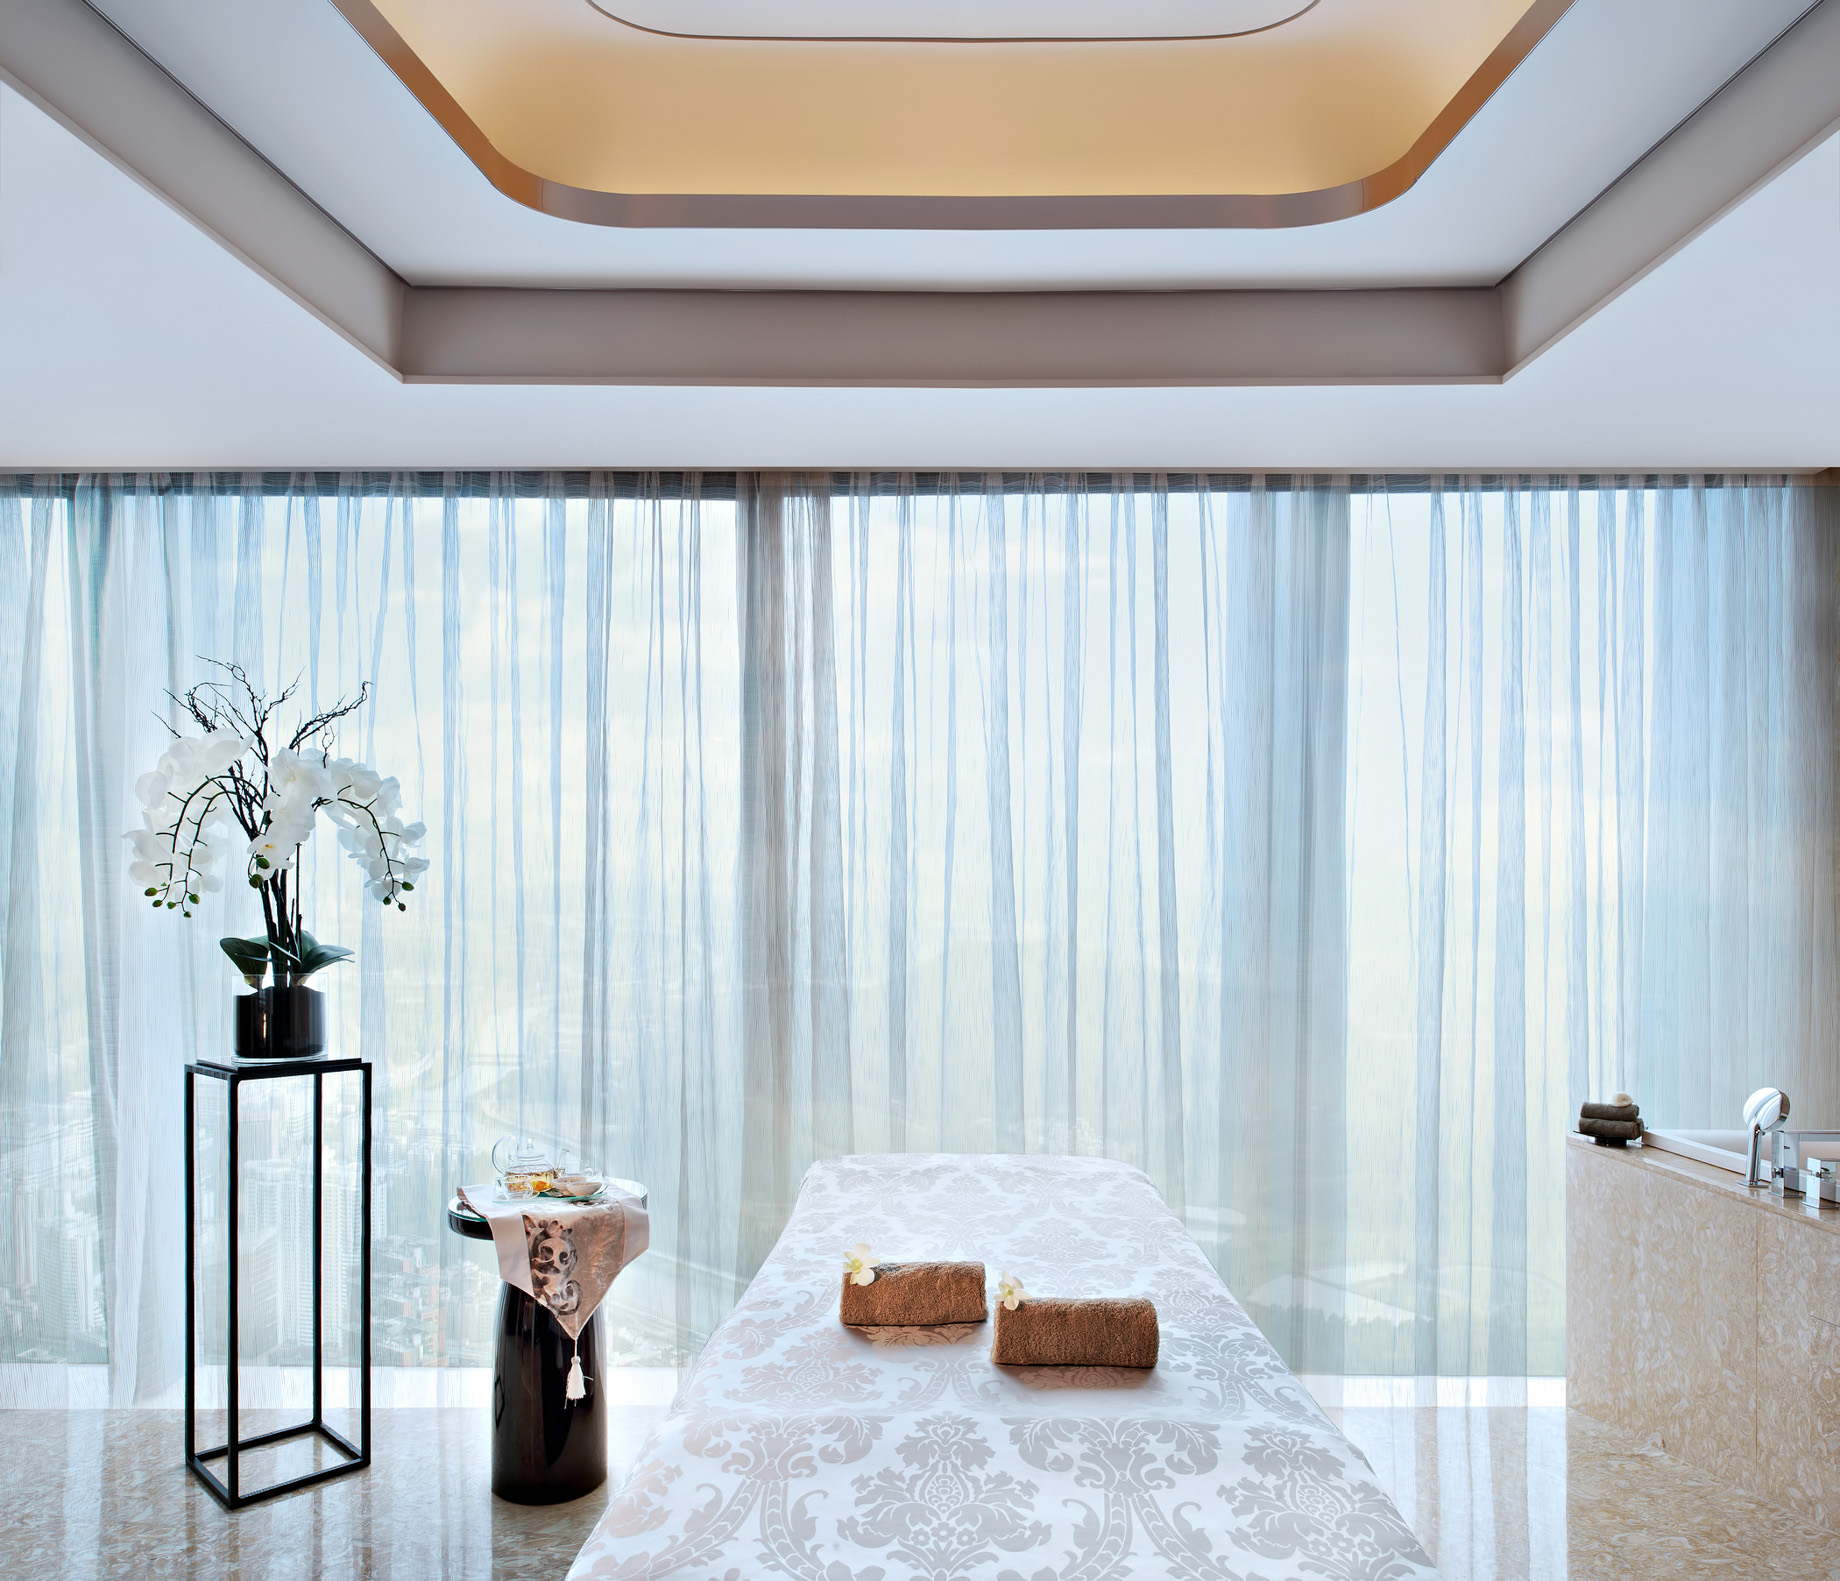 The St. Regis Shenzhen Hotel – Shenzhen, China – 75th Floor Iridium Spa Treatment Room